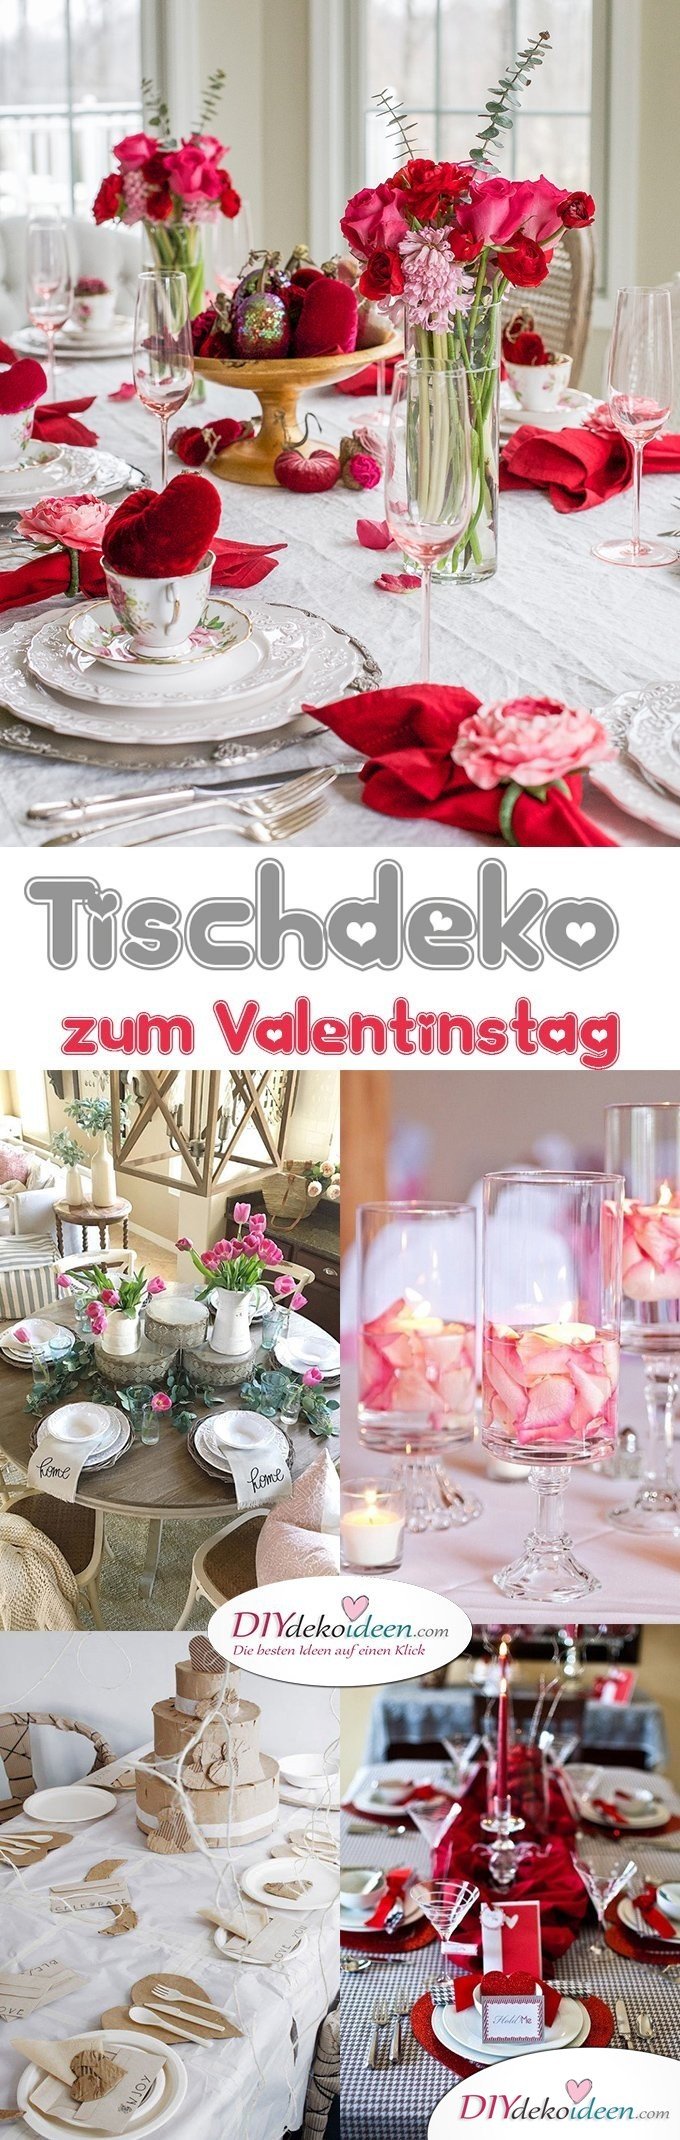 Tischdeko zum Valentinstag, Tisch Deko Ideen, Blumendeko, Valentinstag Deko Ideen, Deko Valentinstag, dekorieren, DIY Dekoideen, Deko basteln, romantische Deko, 